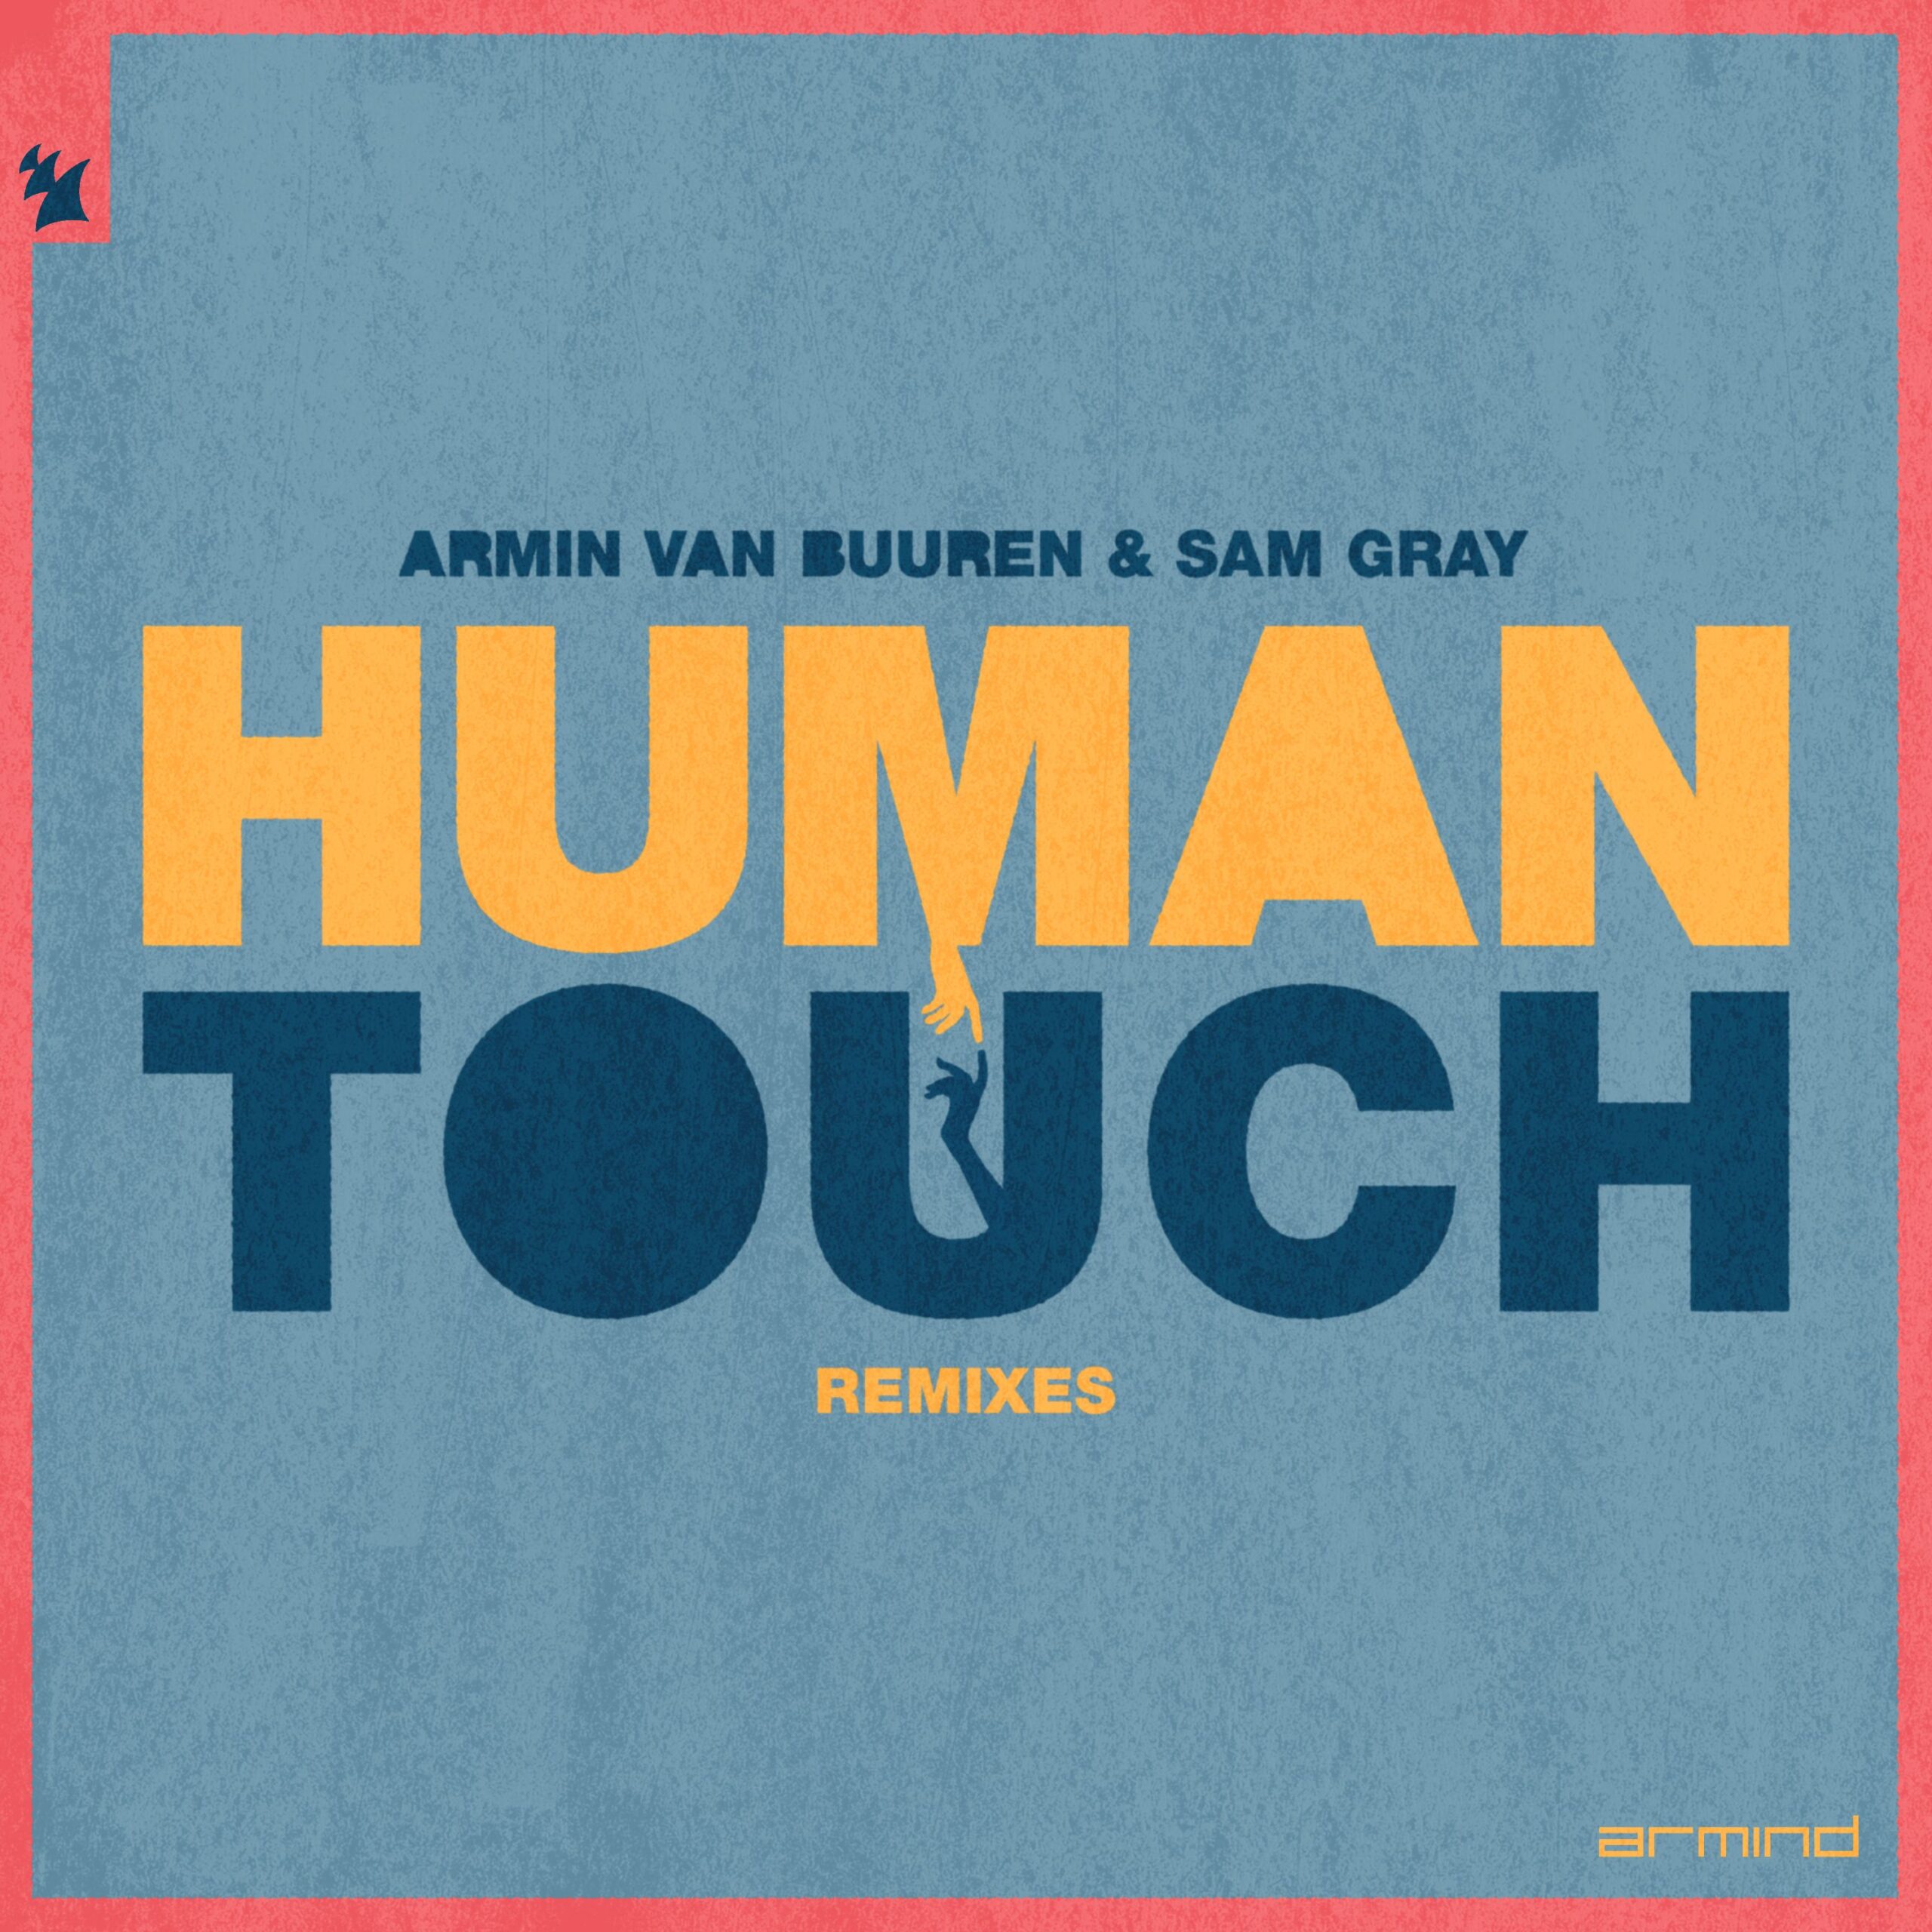 Armin van Buuren and Sam Gray presents Human Touch (Remixes) on Armind